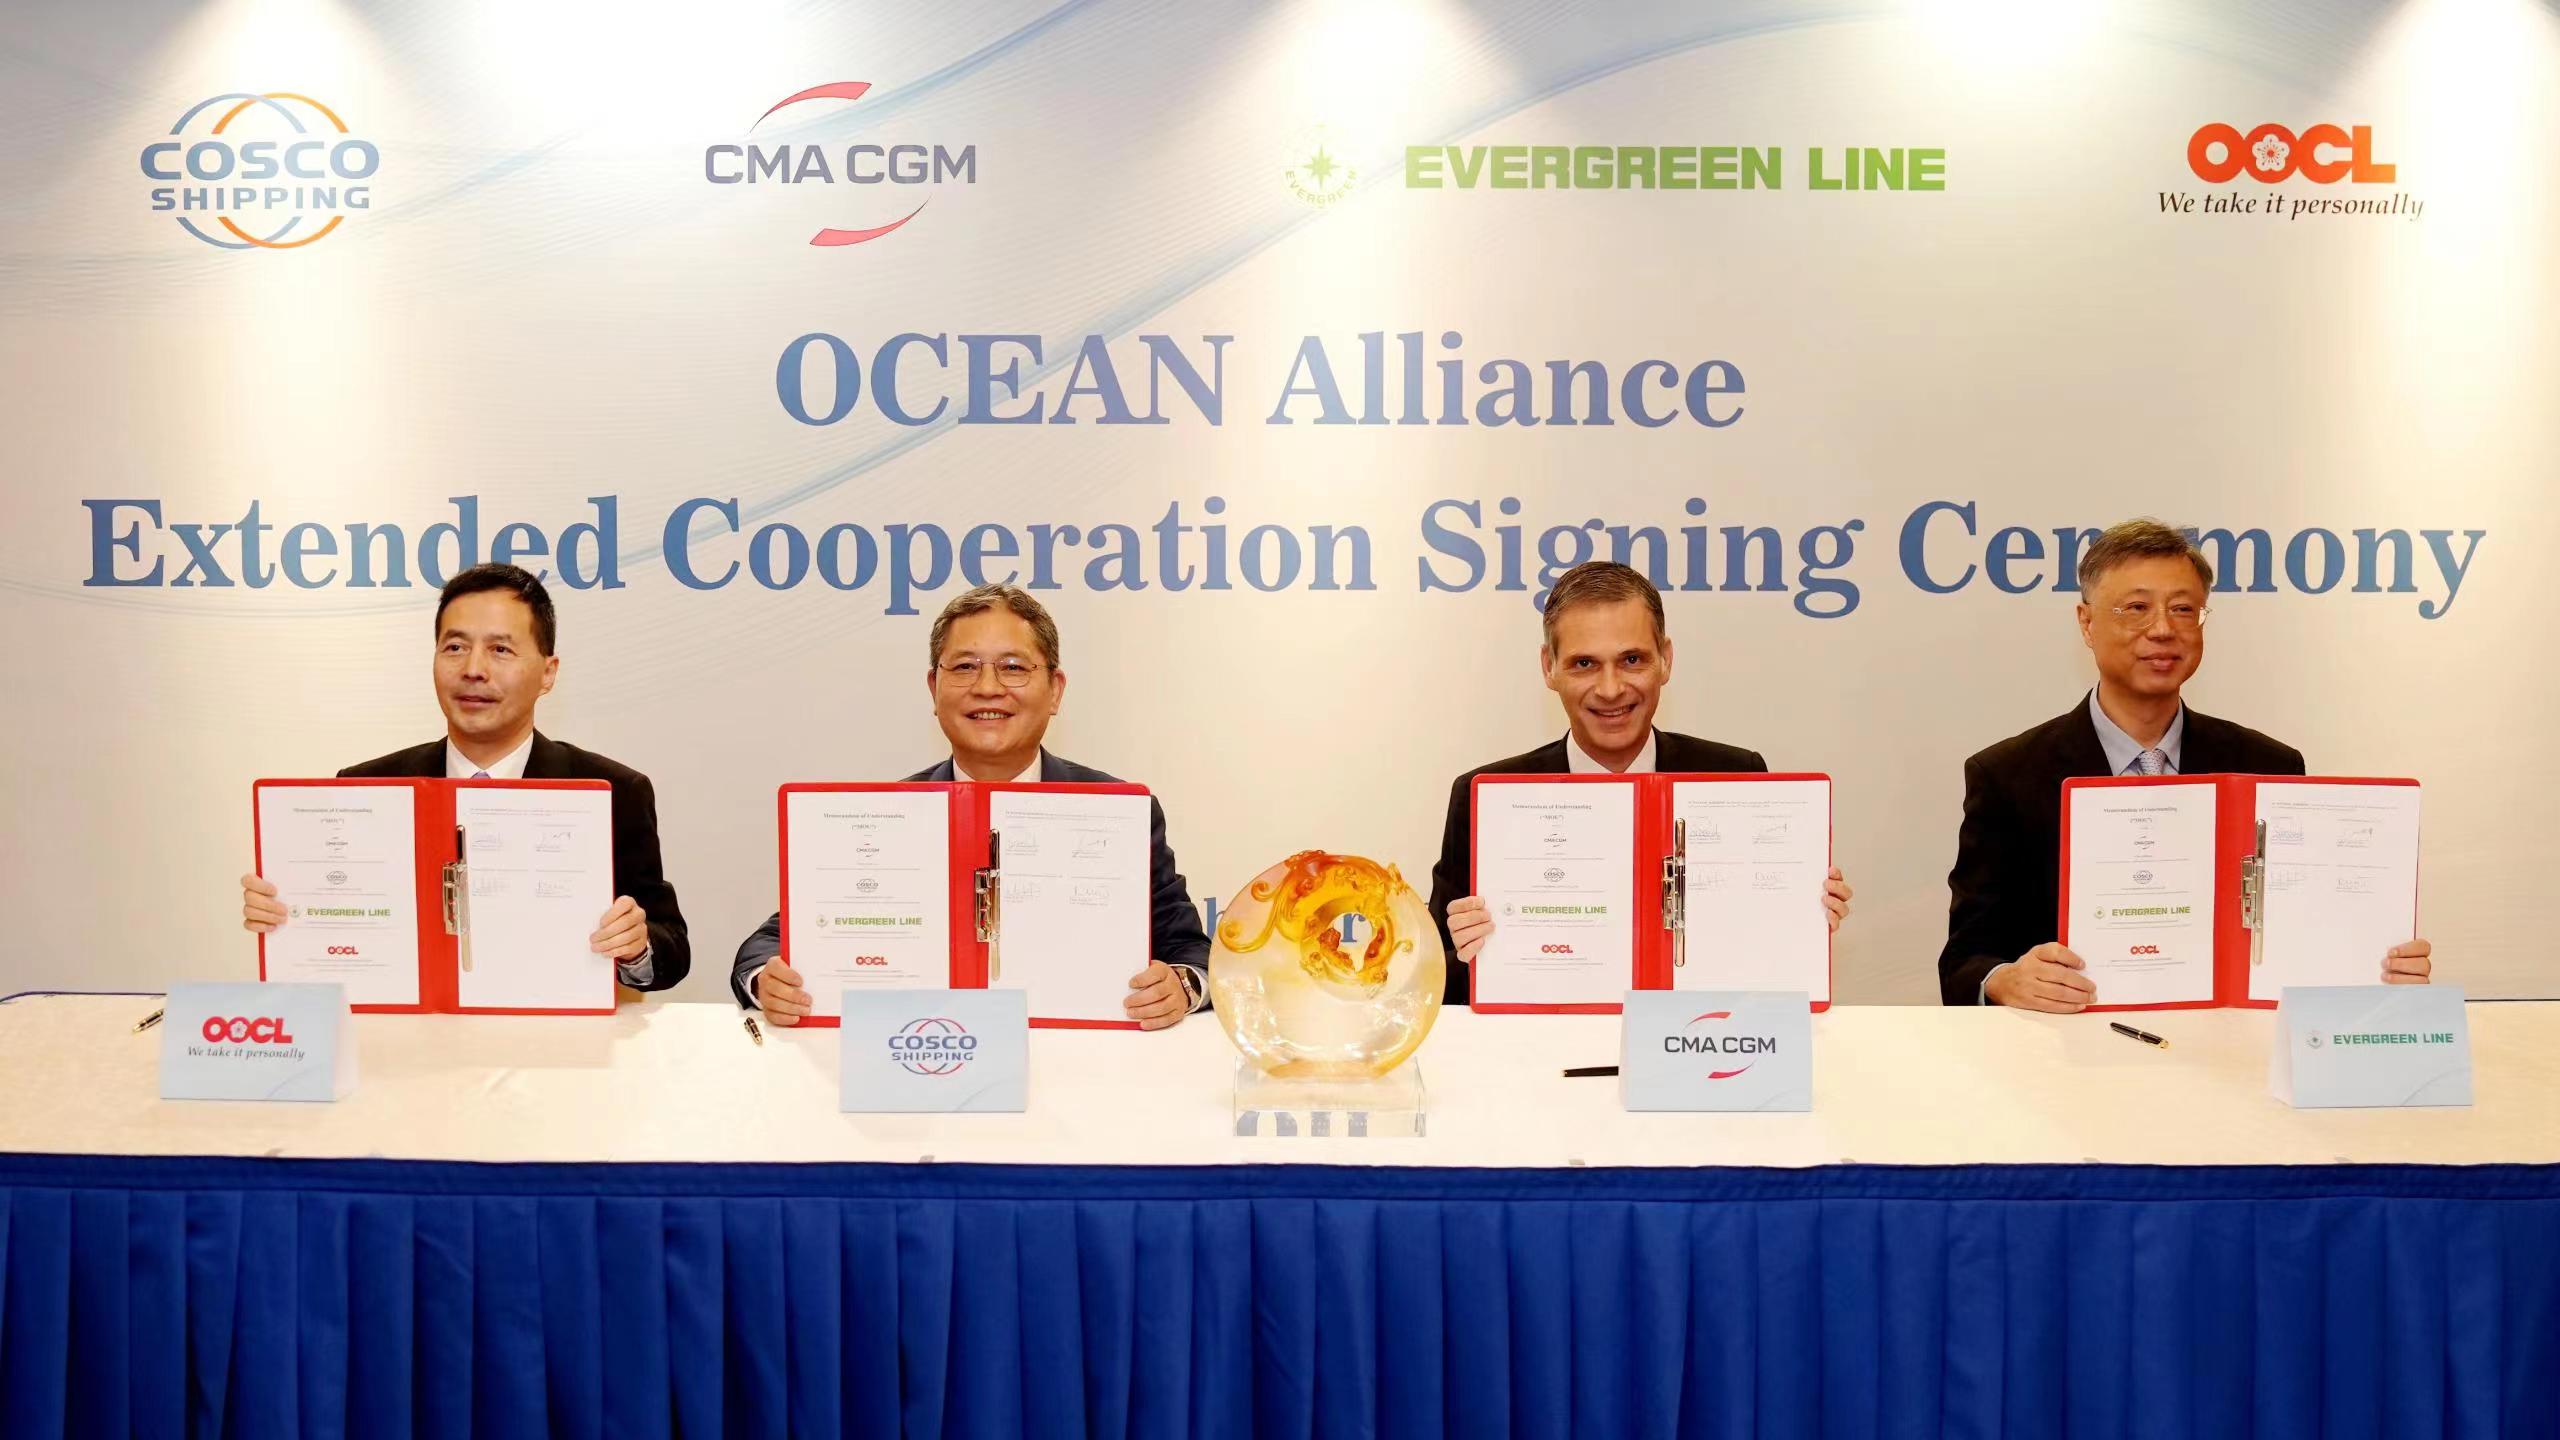 OCEAN Alliance Extends Cooperation